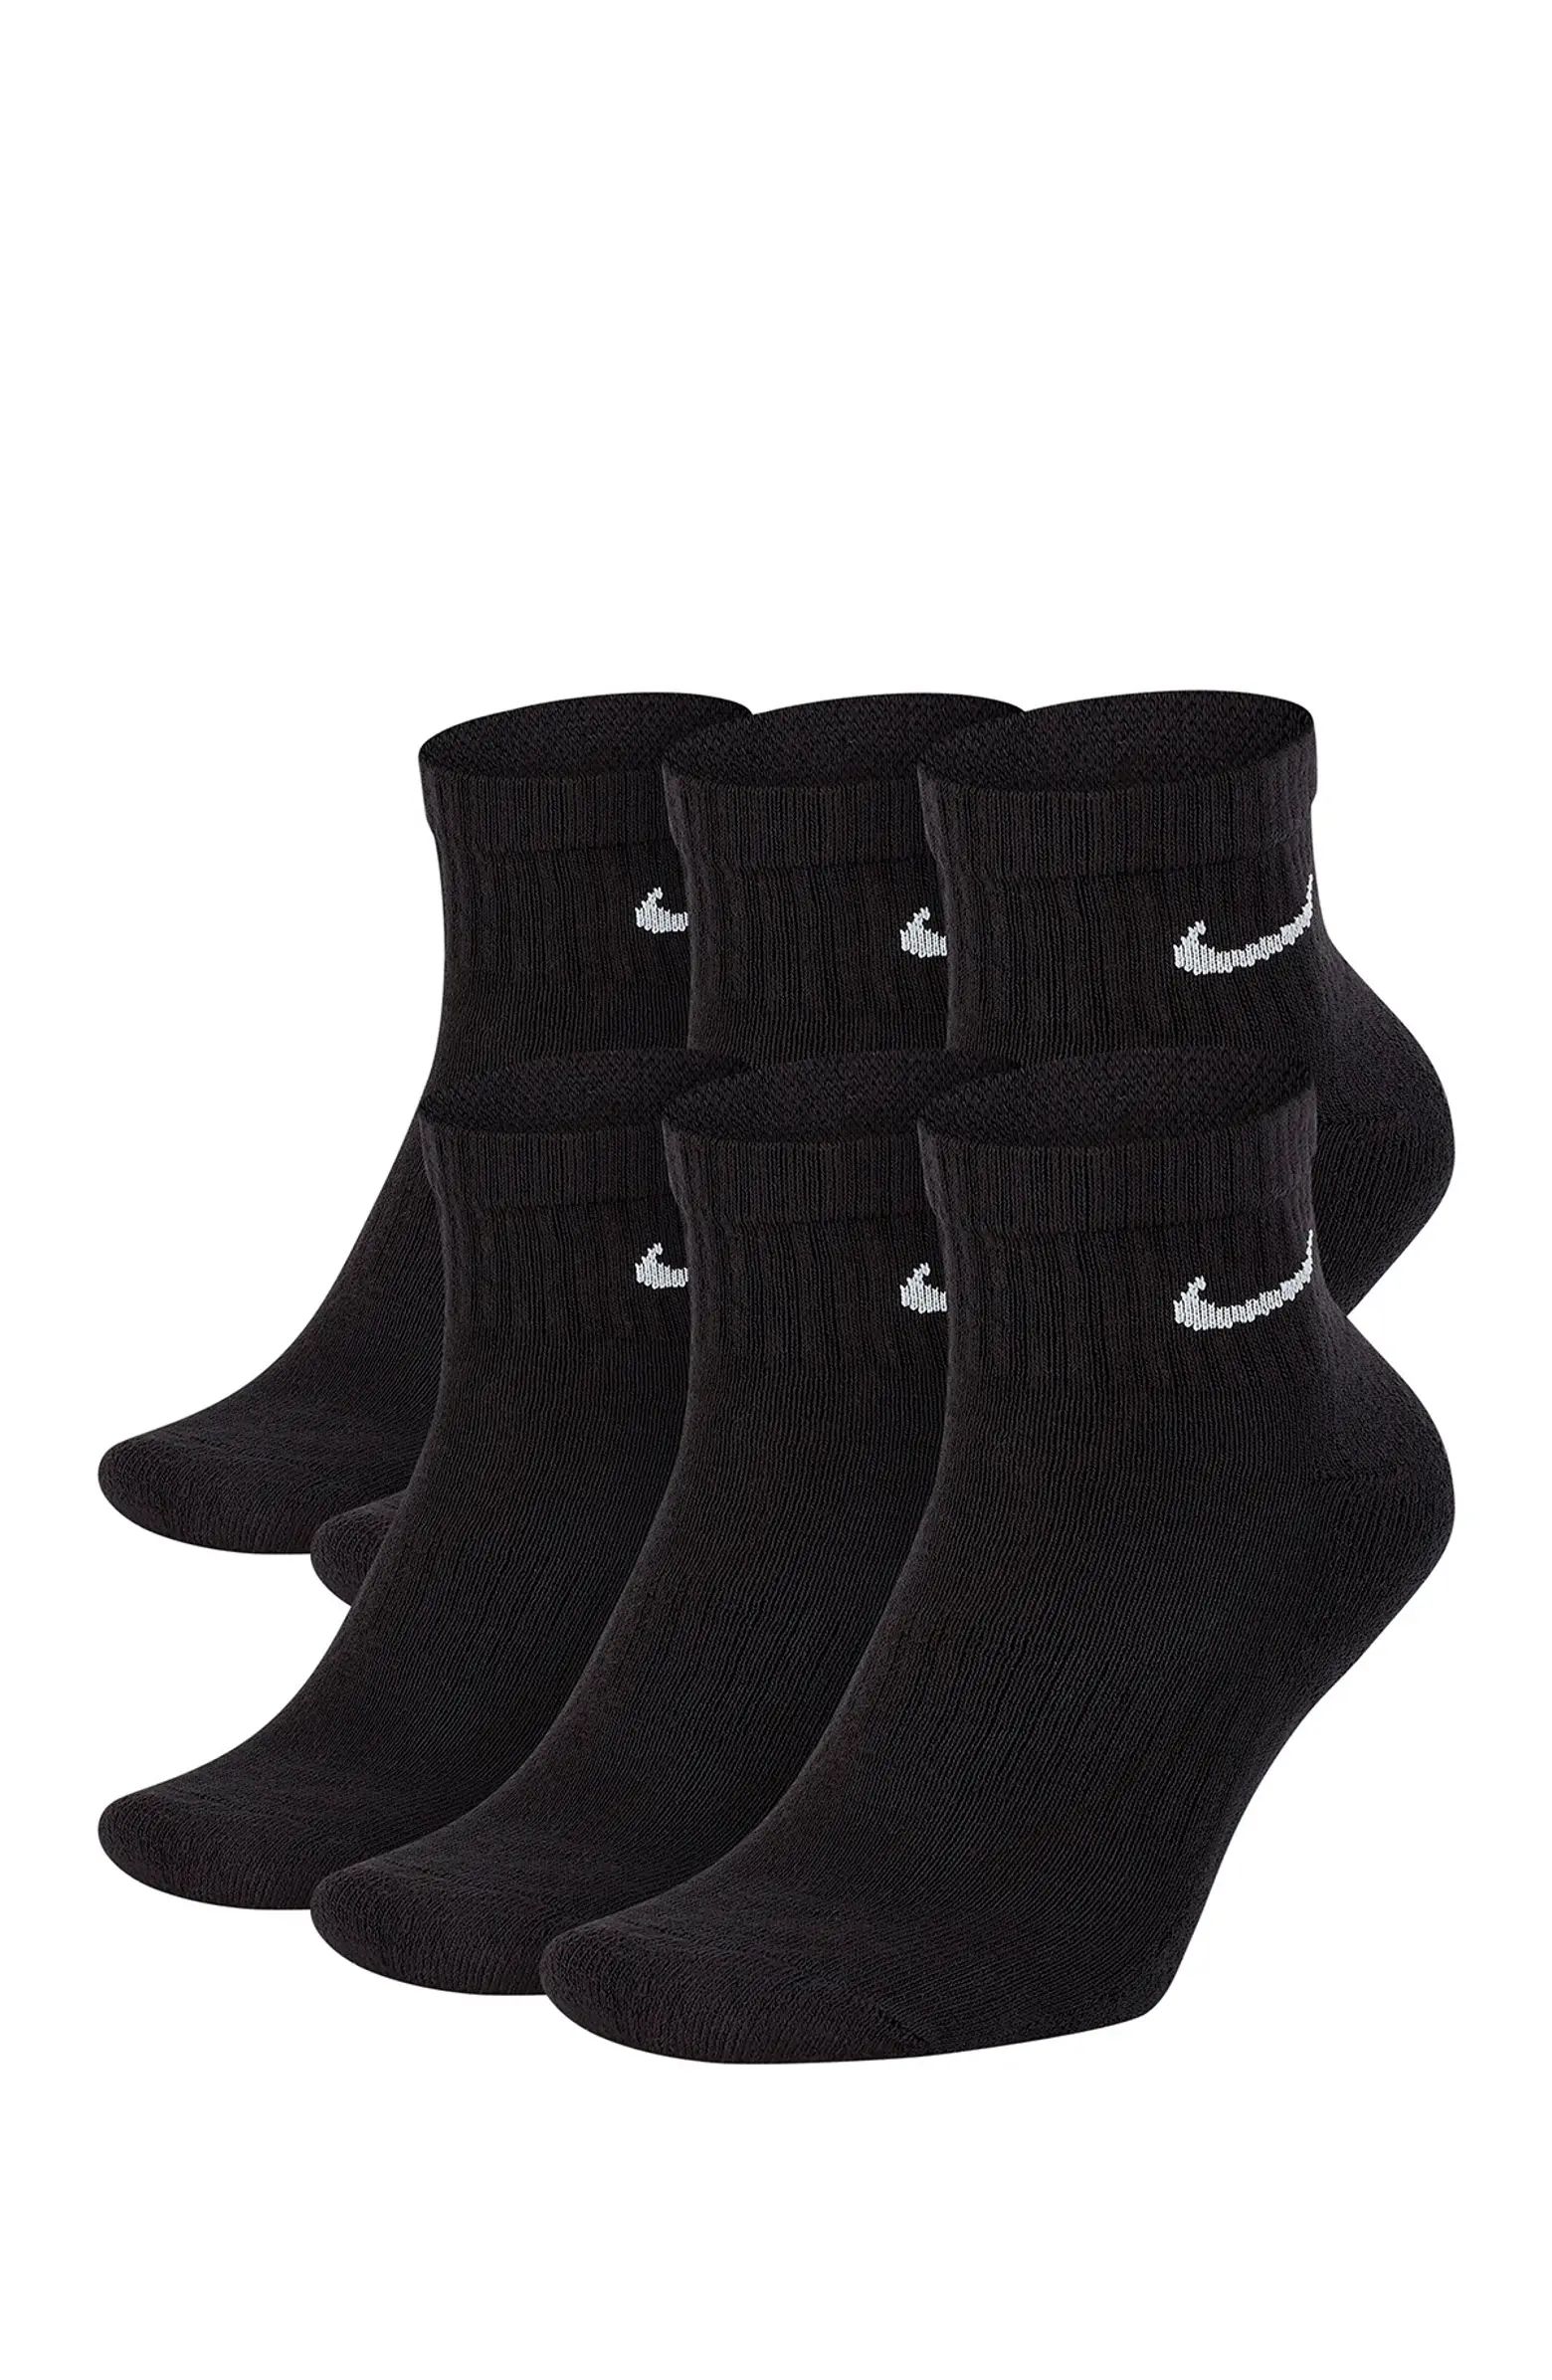 Everyday Cushion Socks - Pack of 6 | Nordstrom Rack